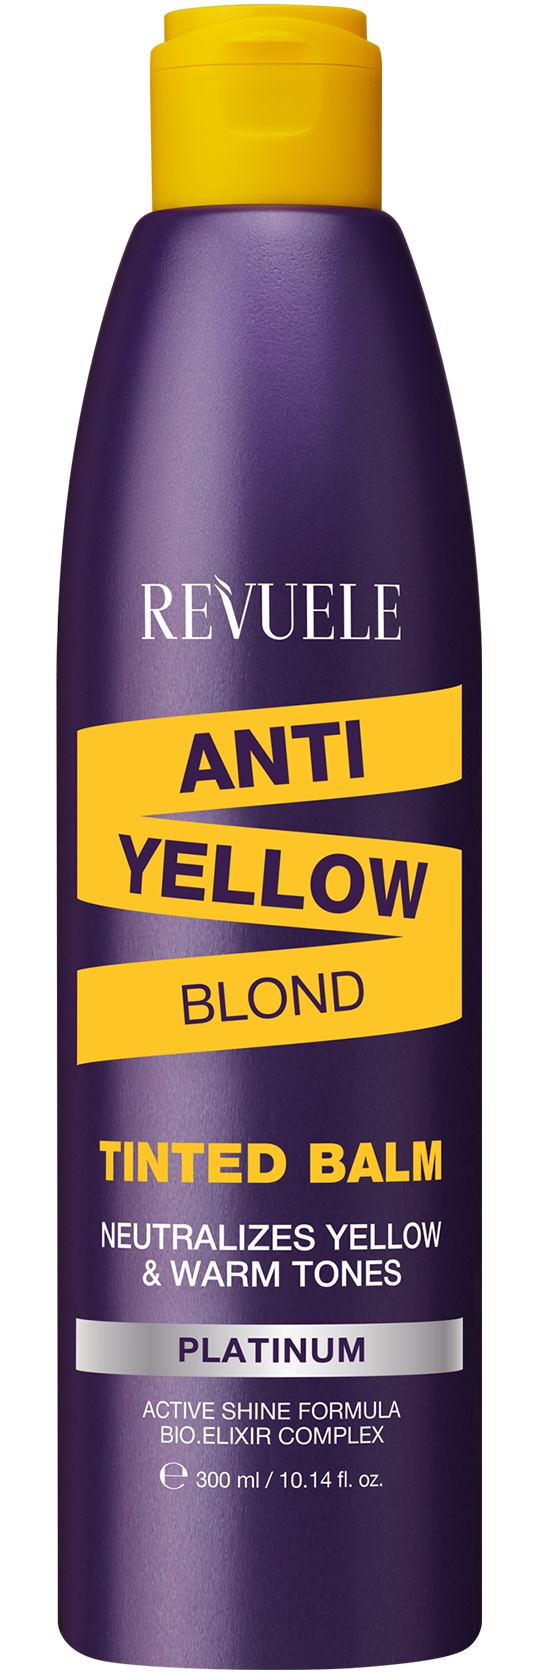 Revuele Anti Yellow Blond Tinted Balm